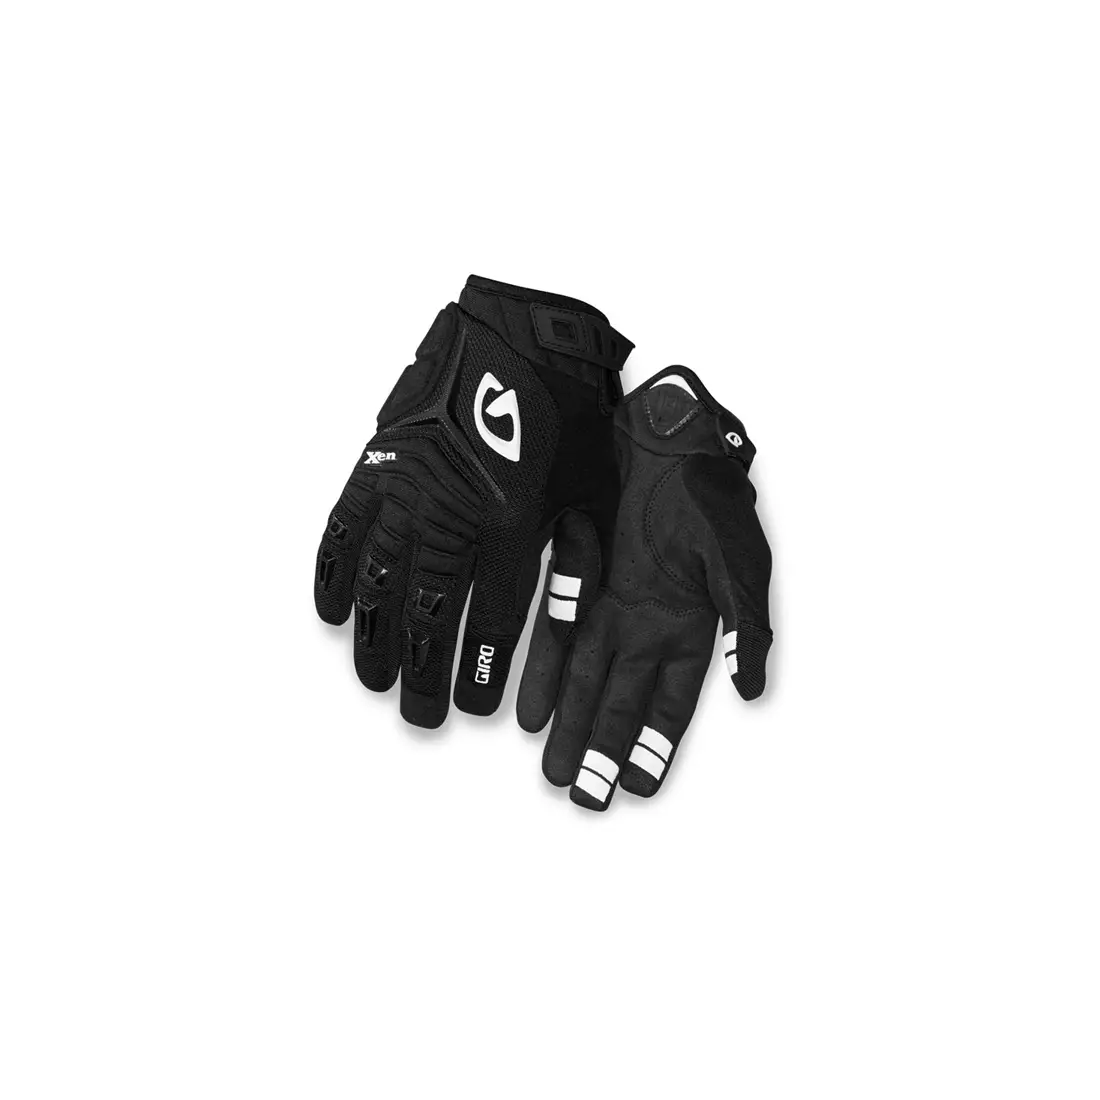 Cyklistické rukavice GIRO XEN, černobílé